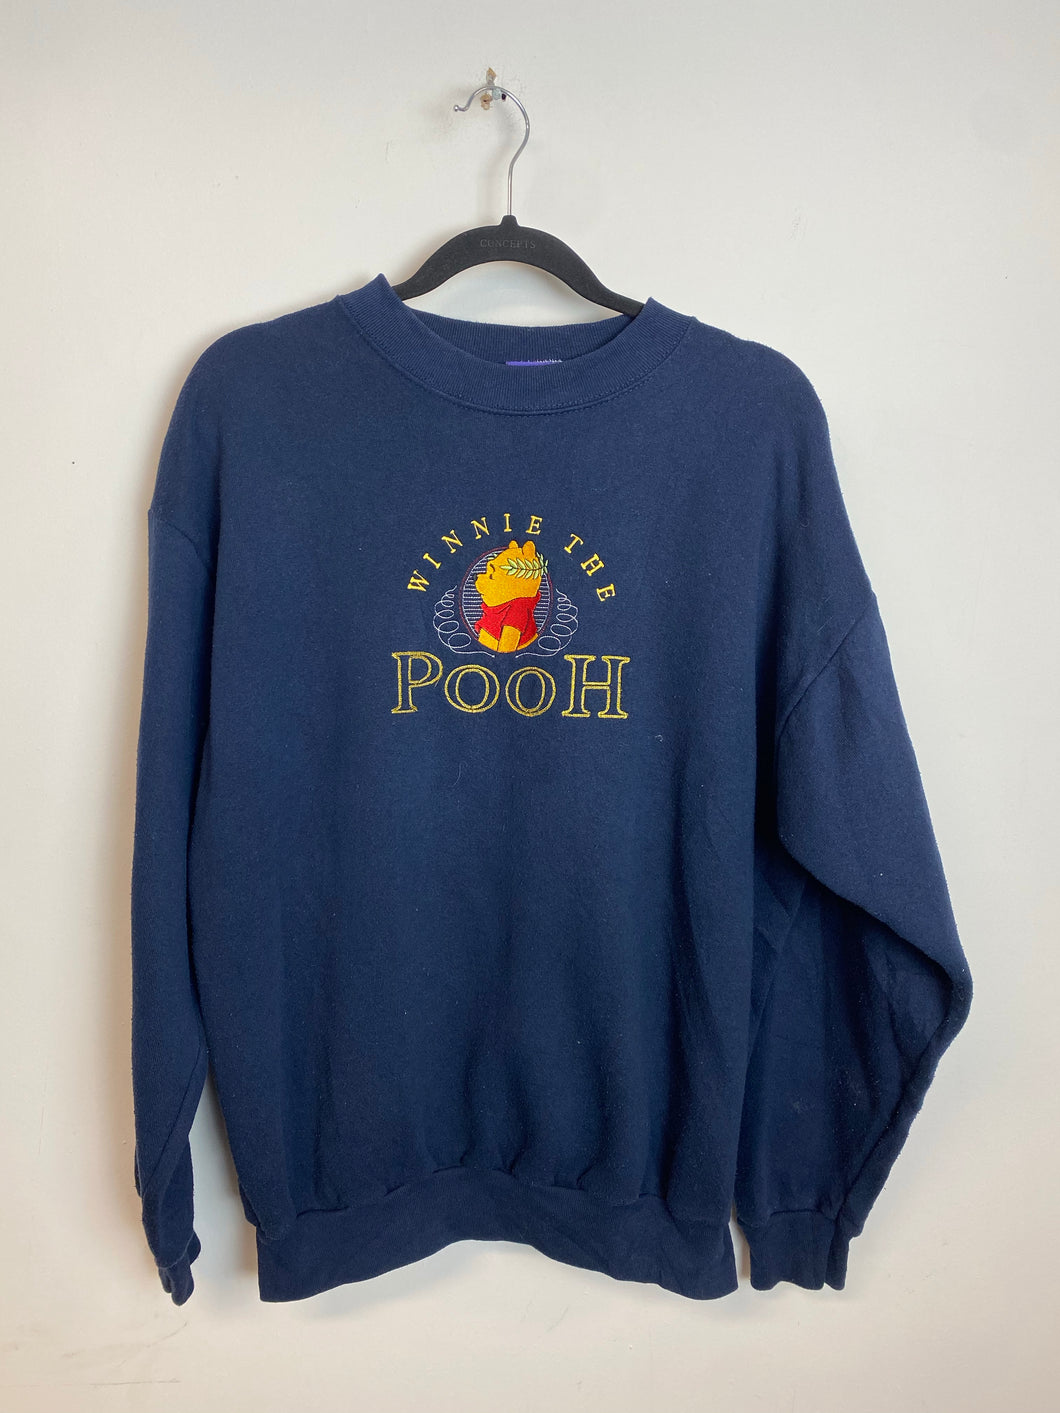 Vintage Embroidered Pooh Crewneck - XS/S